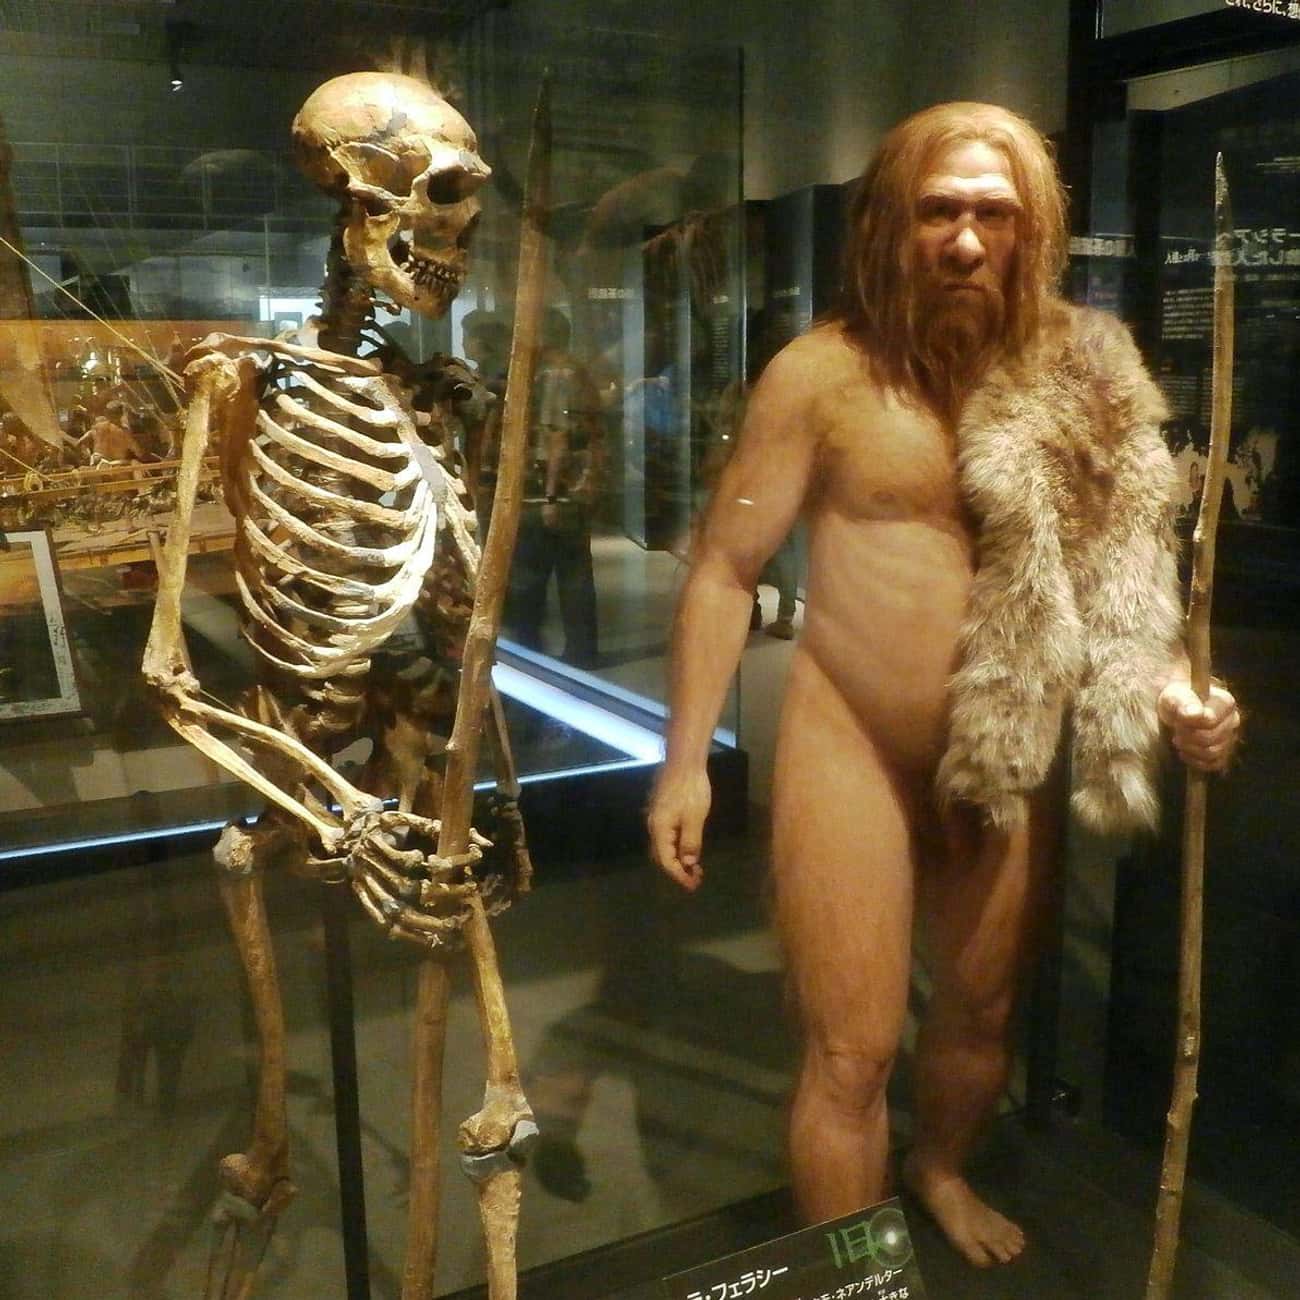 Neanderthals Transmitted Dangerous Genes That Affect Human Genitalia